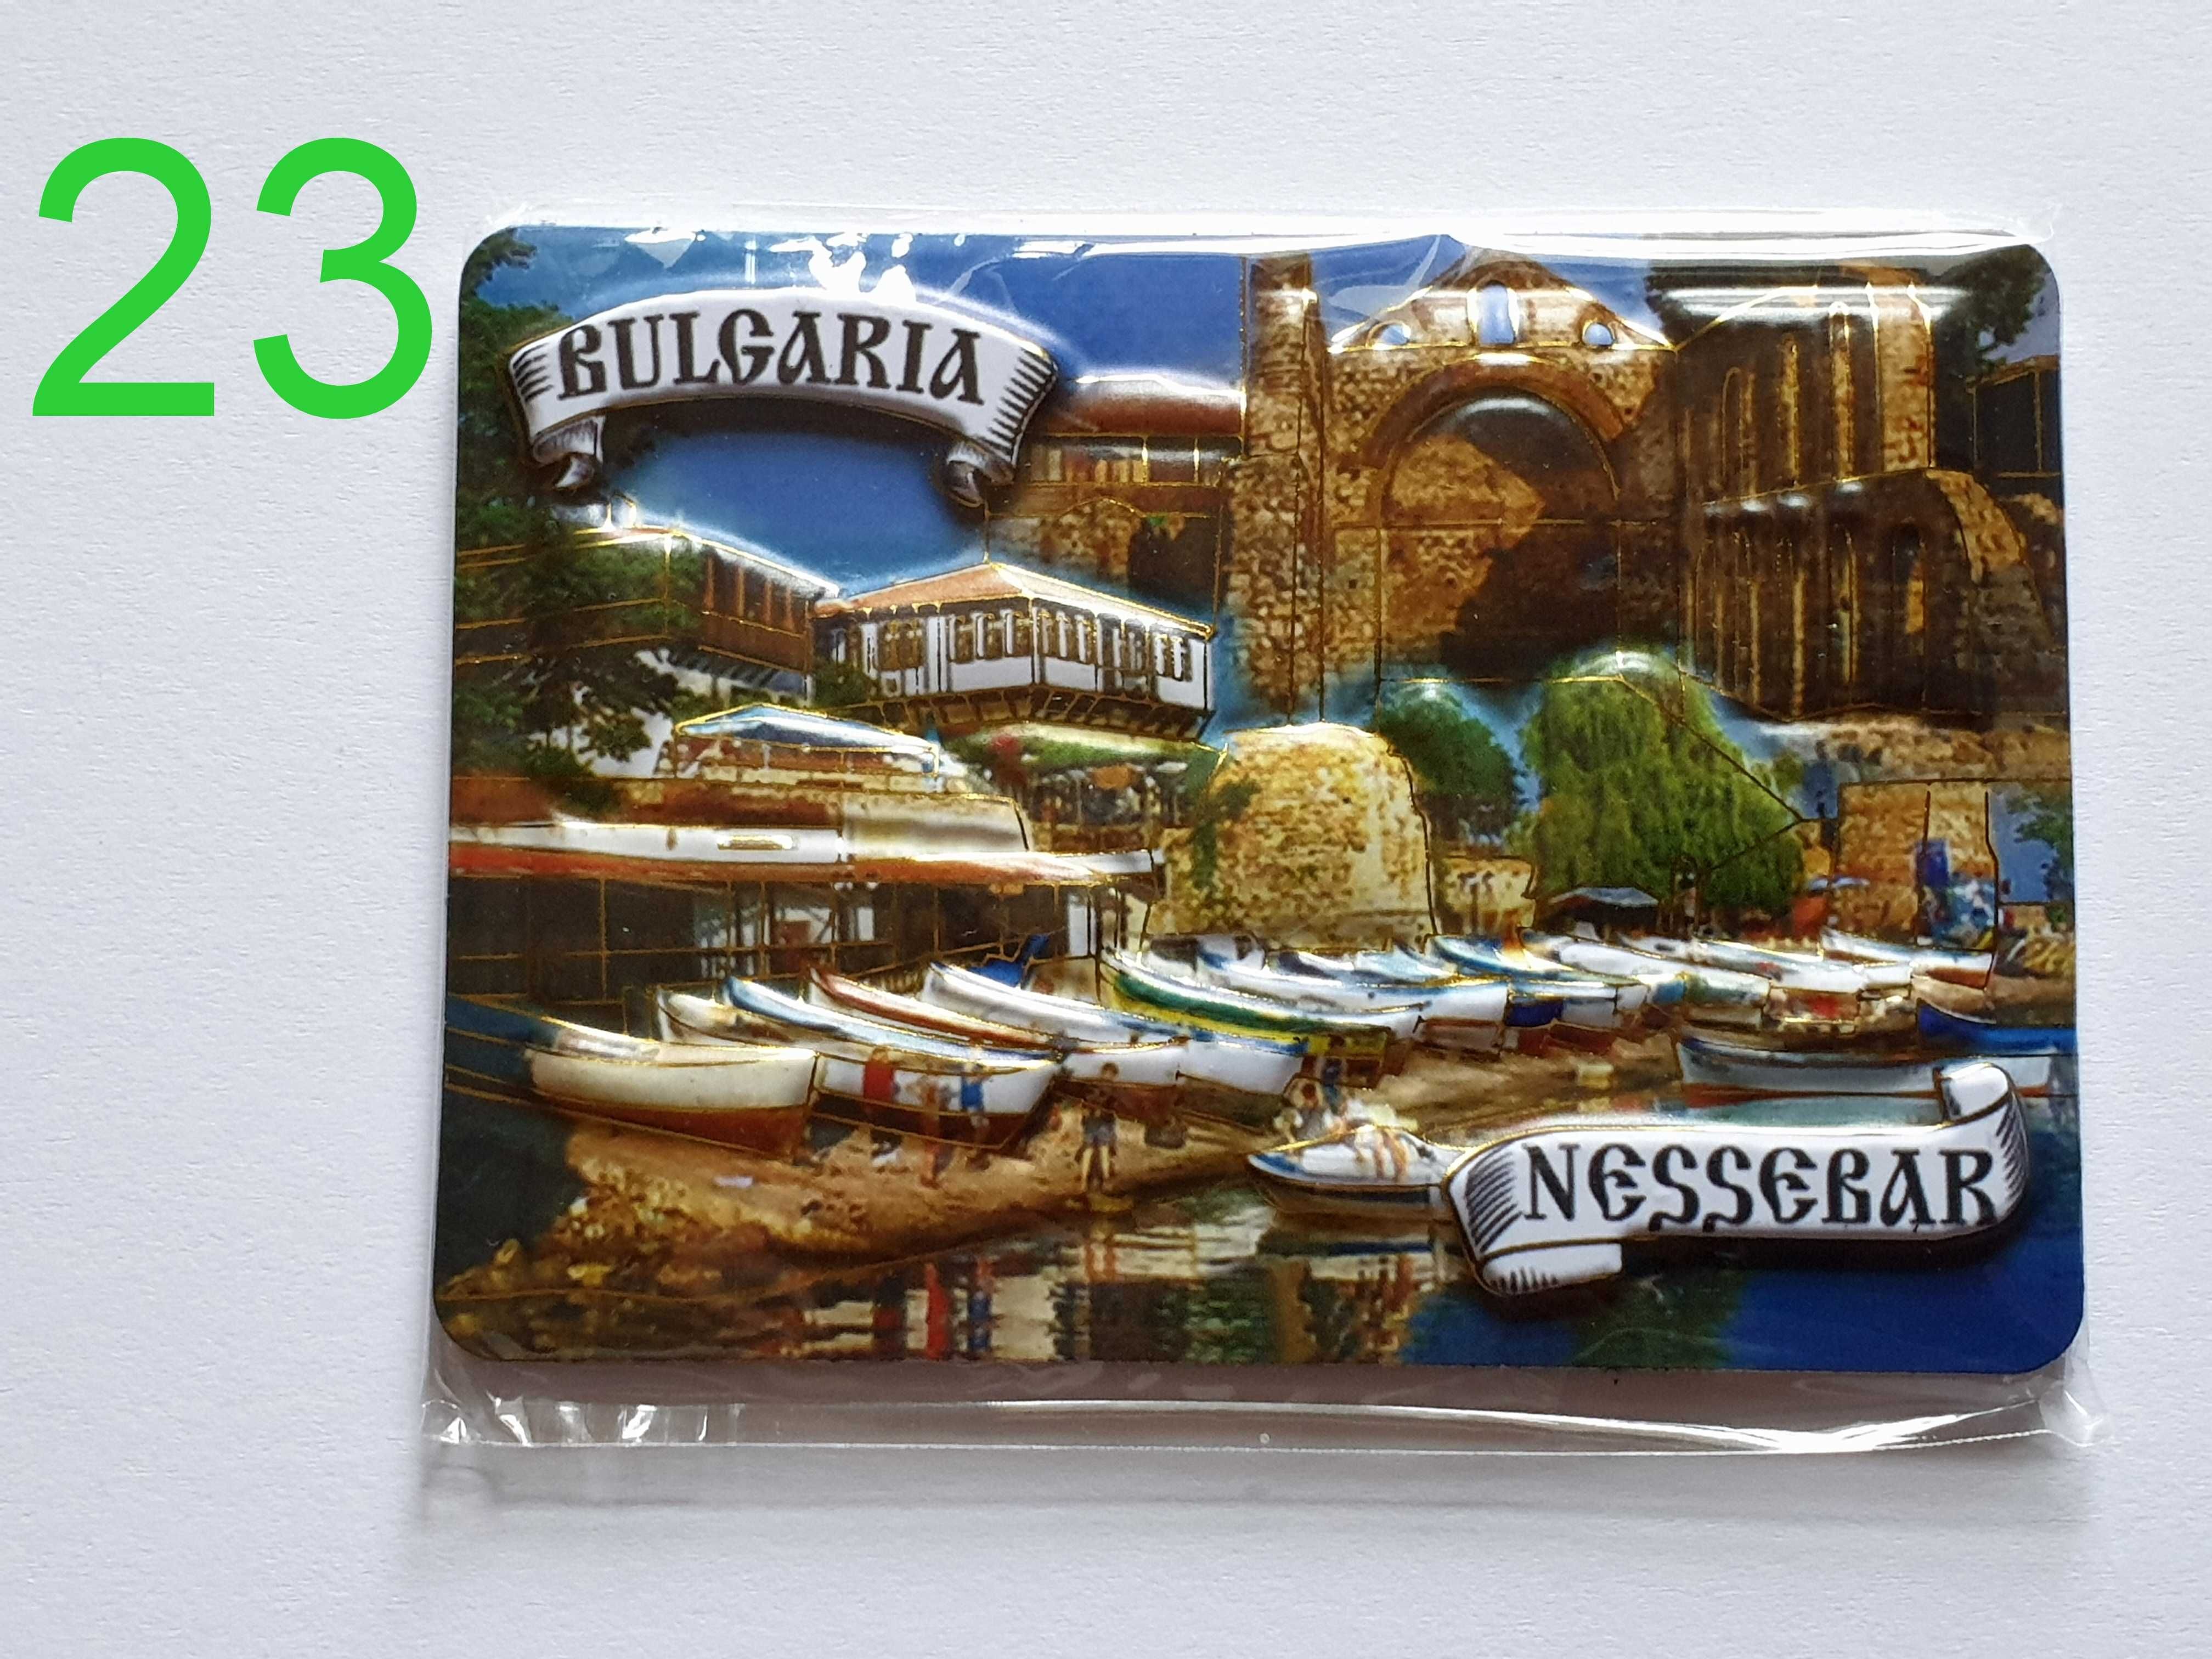 Bułgaria , Bulgaria - Magnes na lodówkę - wzór 23